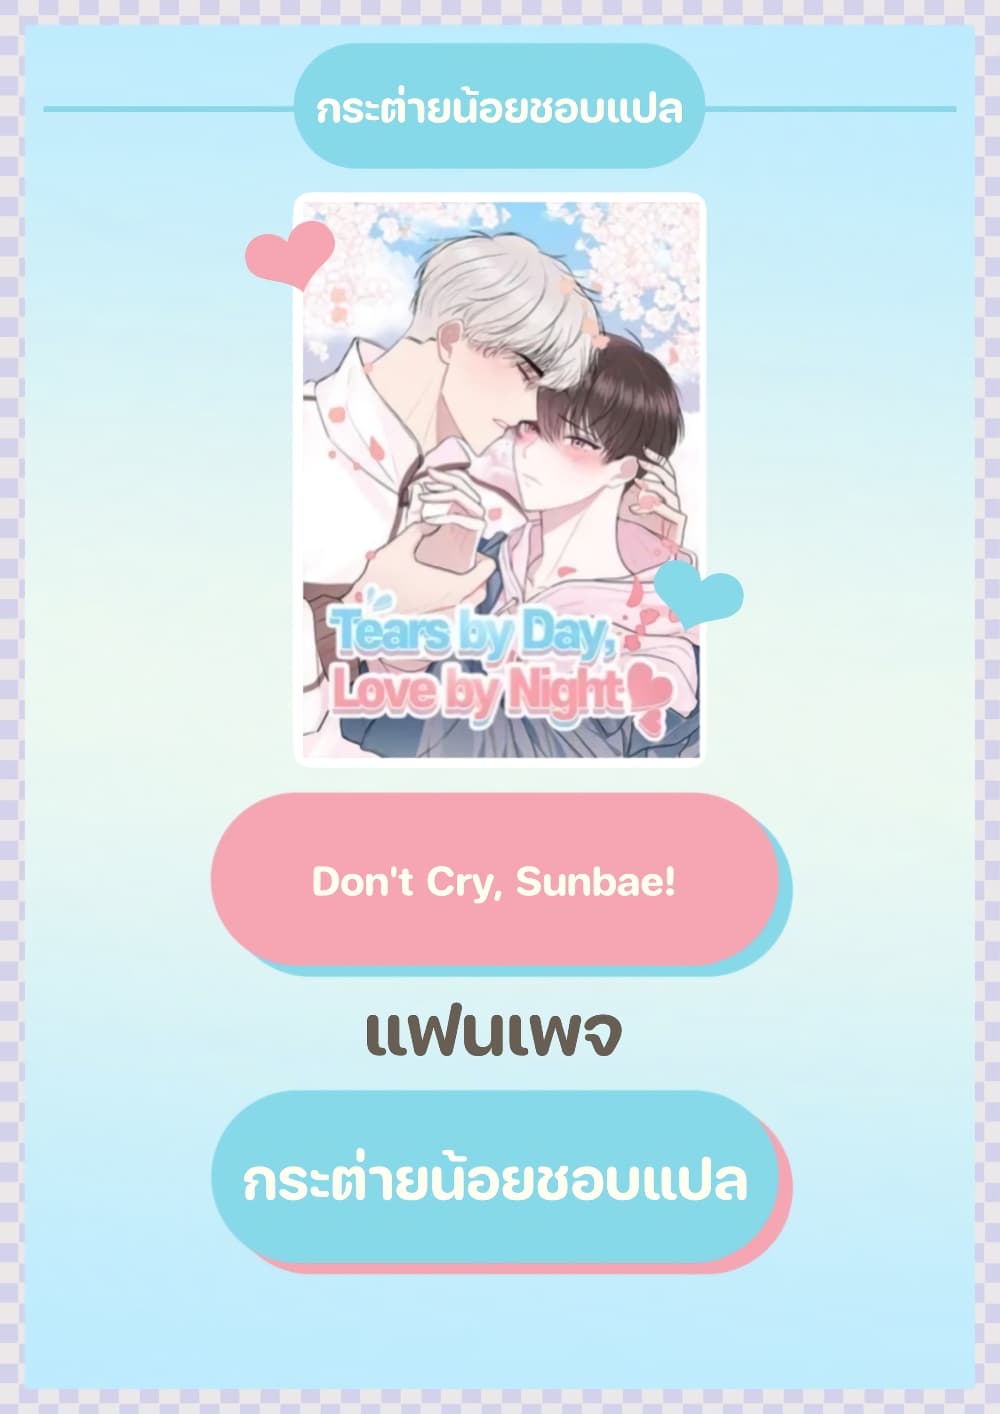 Donโ€t Cry, Sunbae! 11 (1)